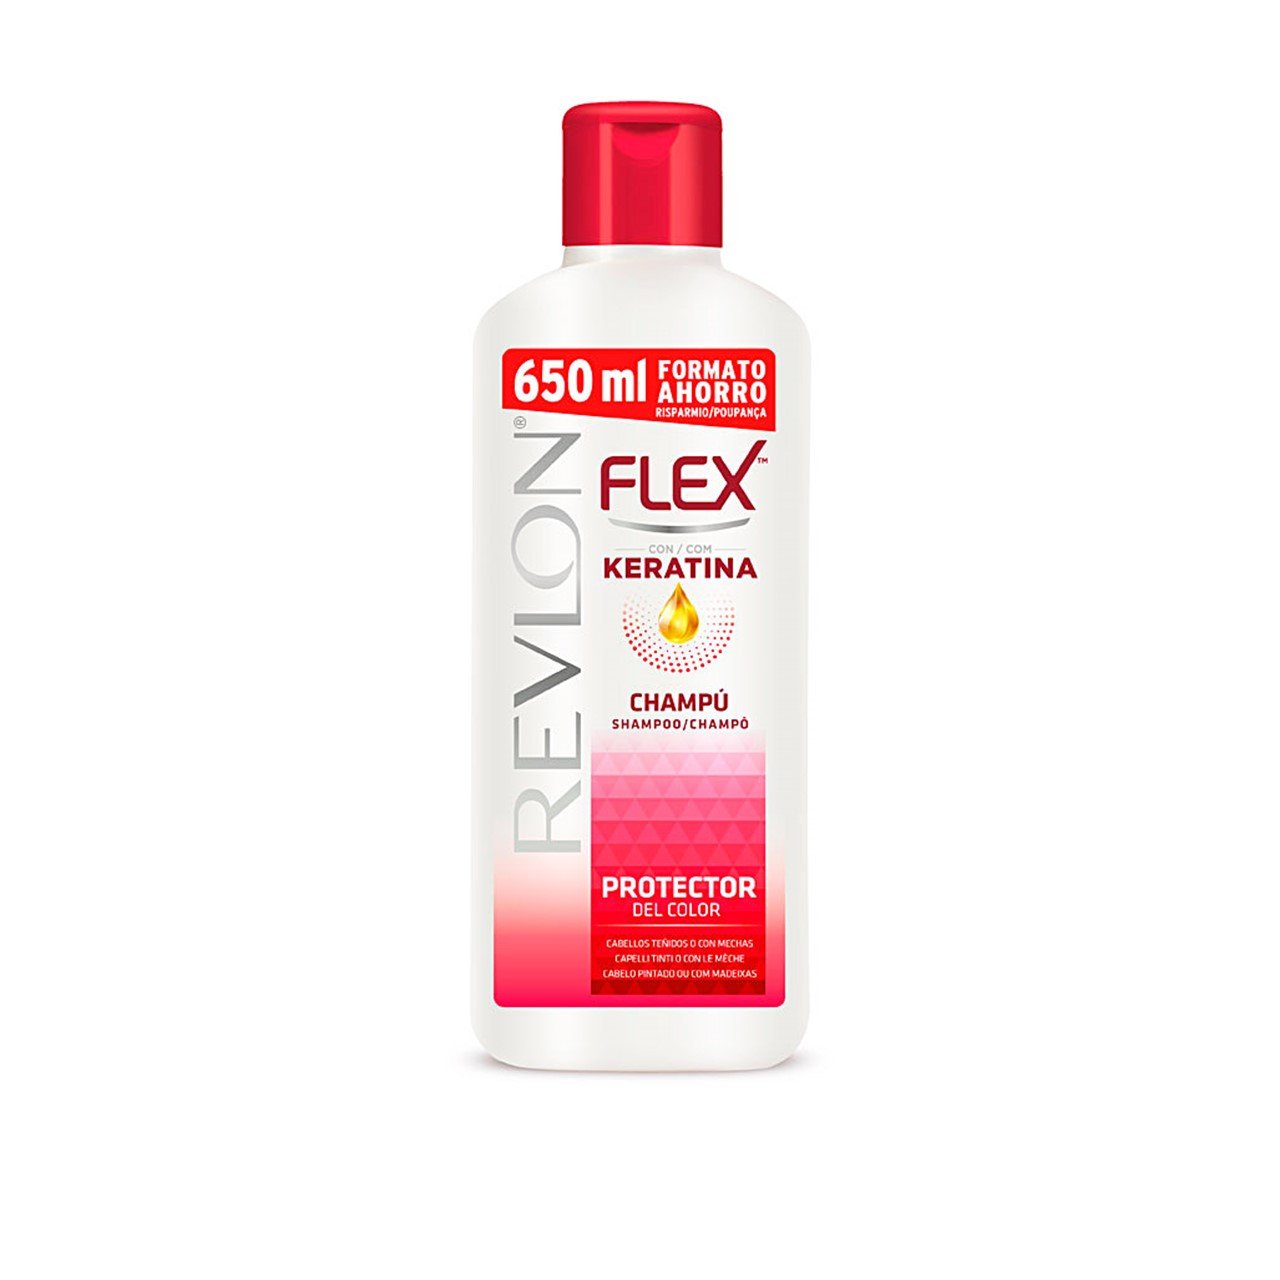 Revlon Flex Keratin Color Protection Shampoo 650ml